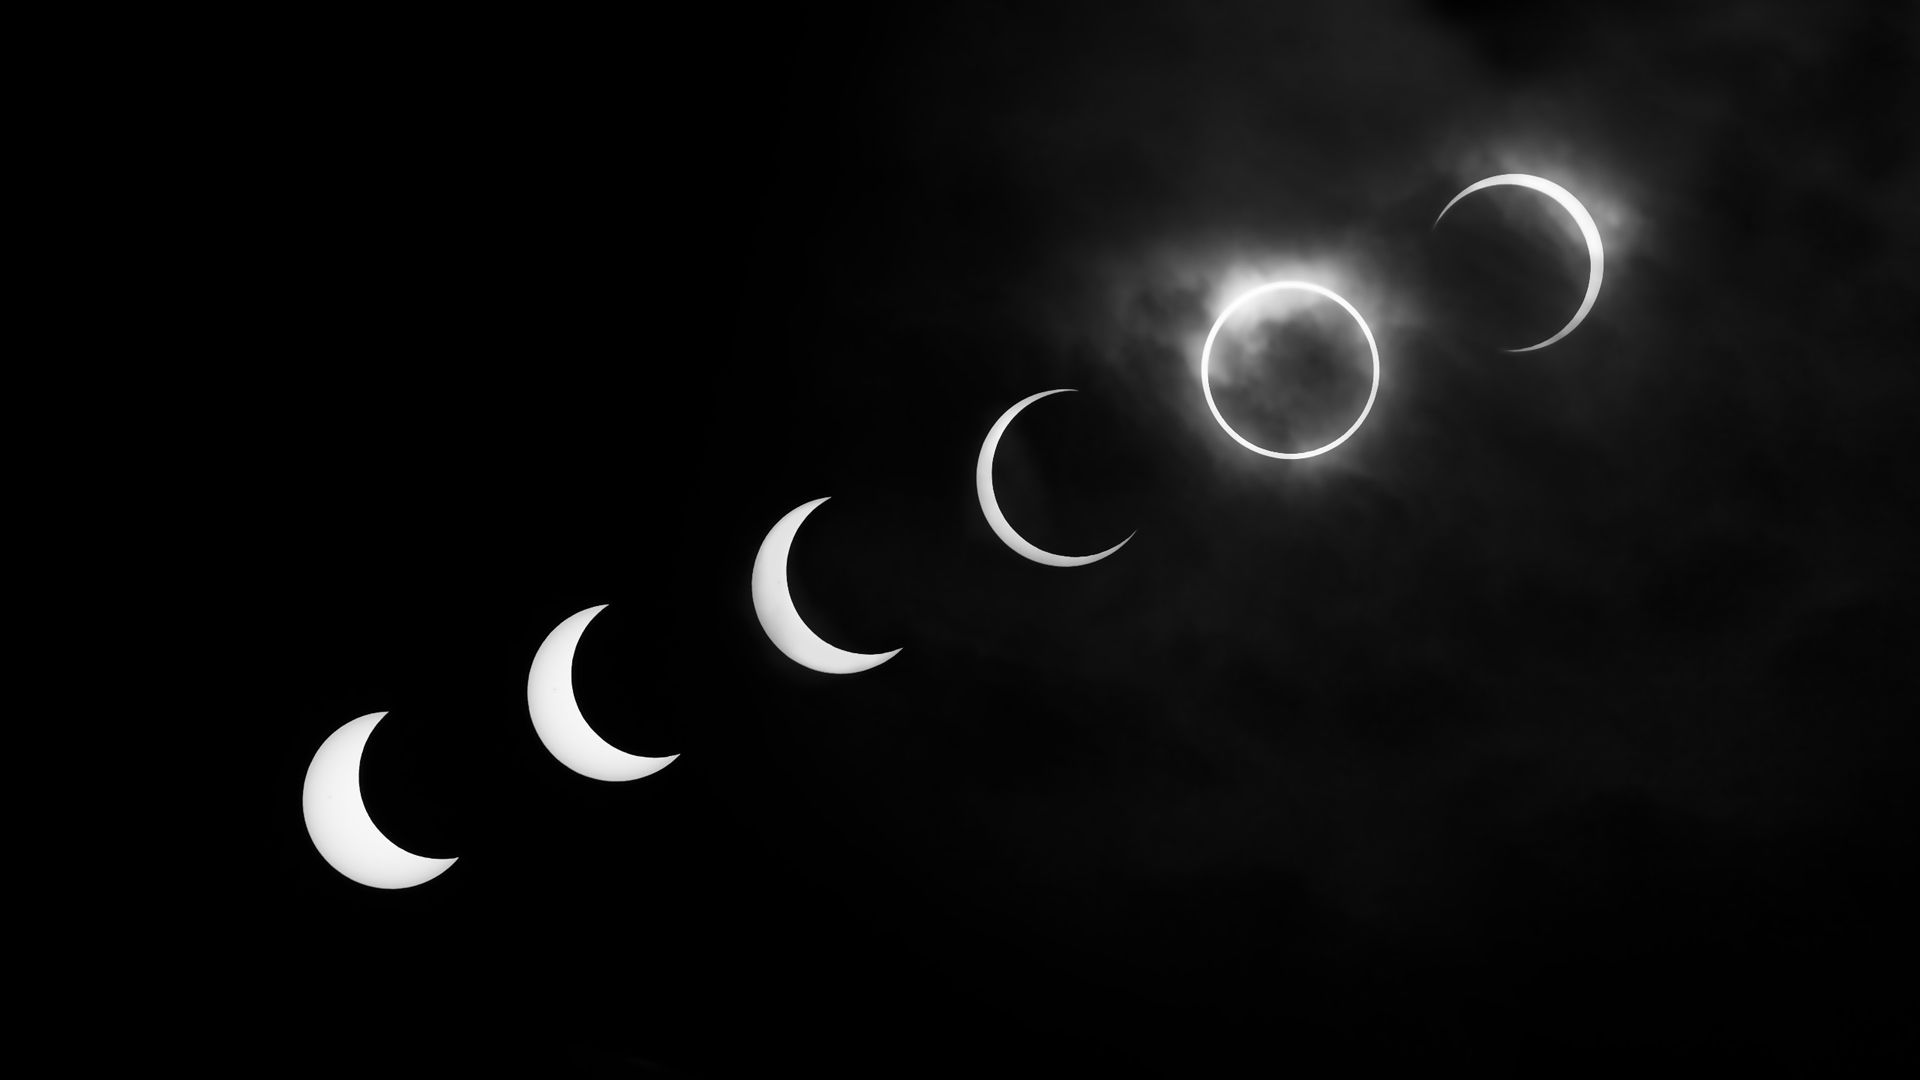 Free download Solar eclipse black and white desktop wallpaper